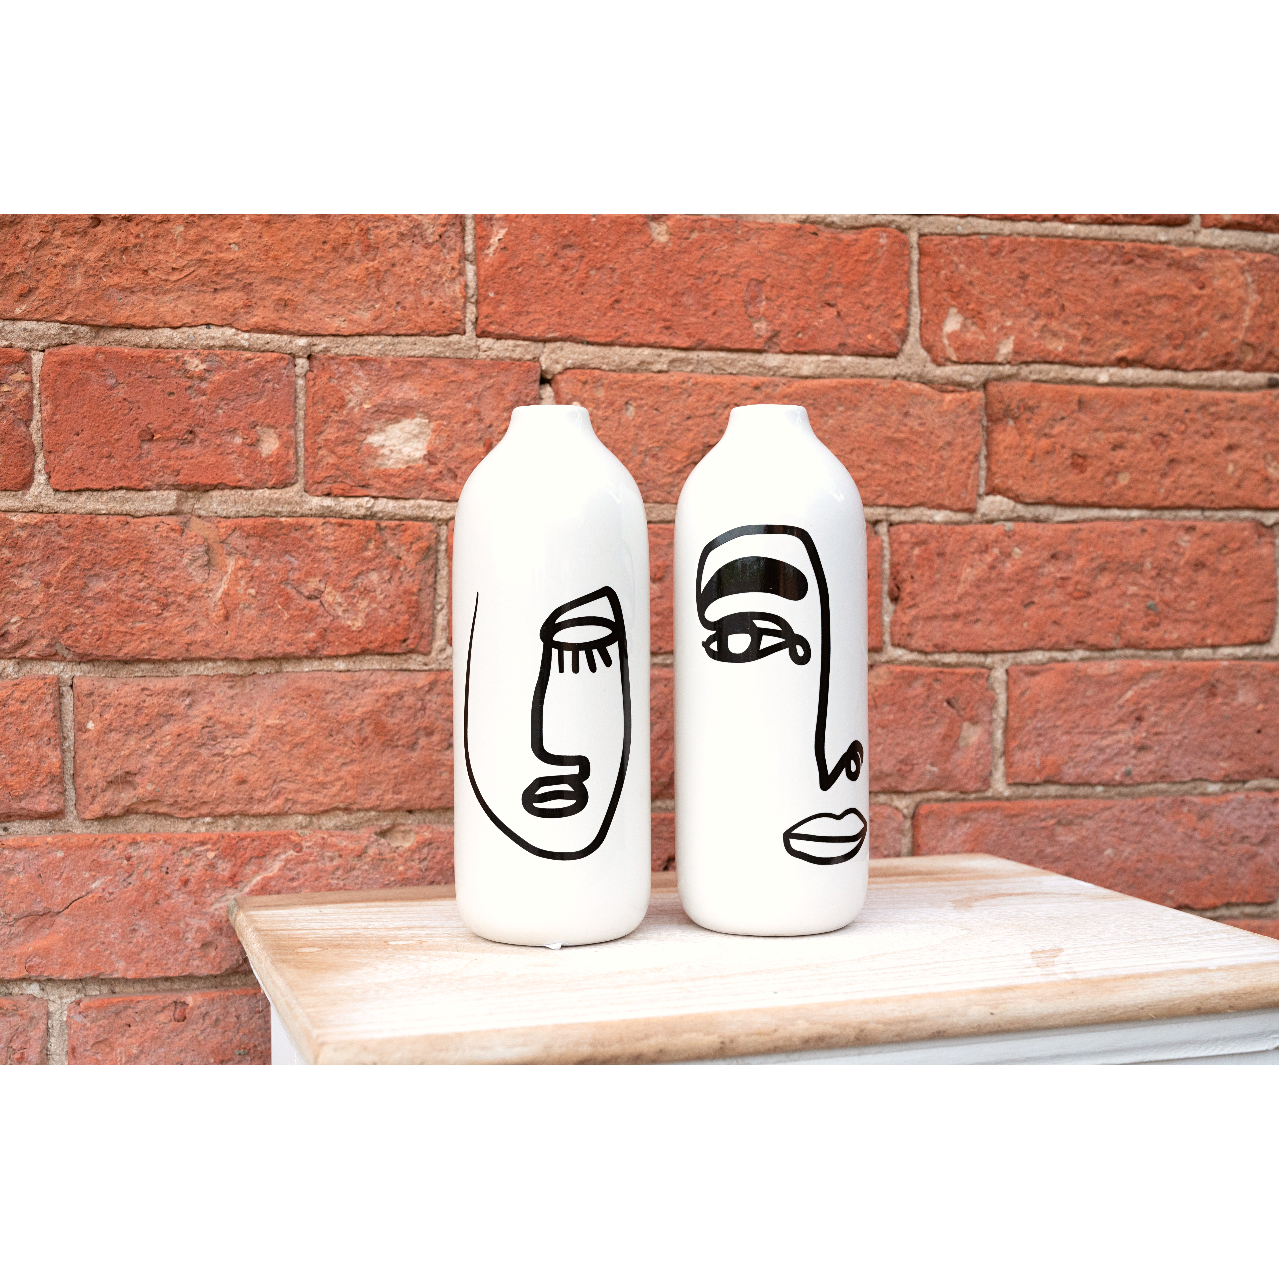 Set of 2 Monochrome Face Ceramic Vases - Ashton and Finch